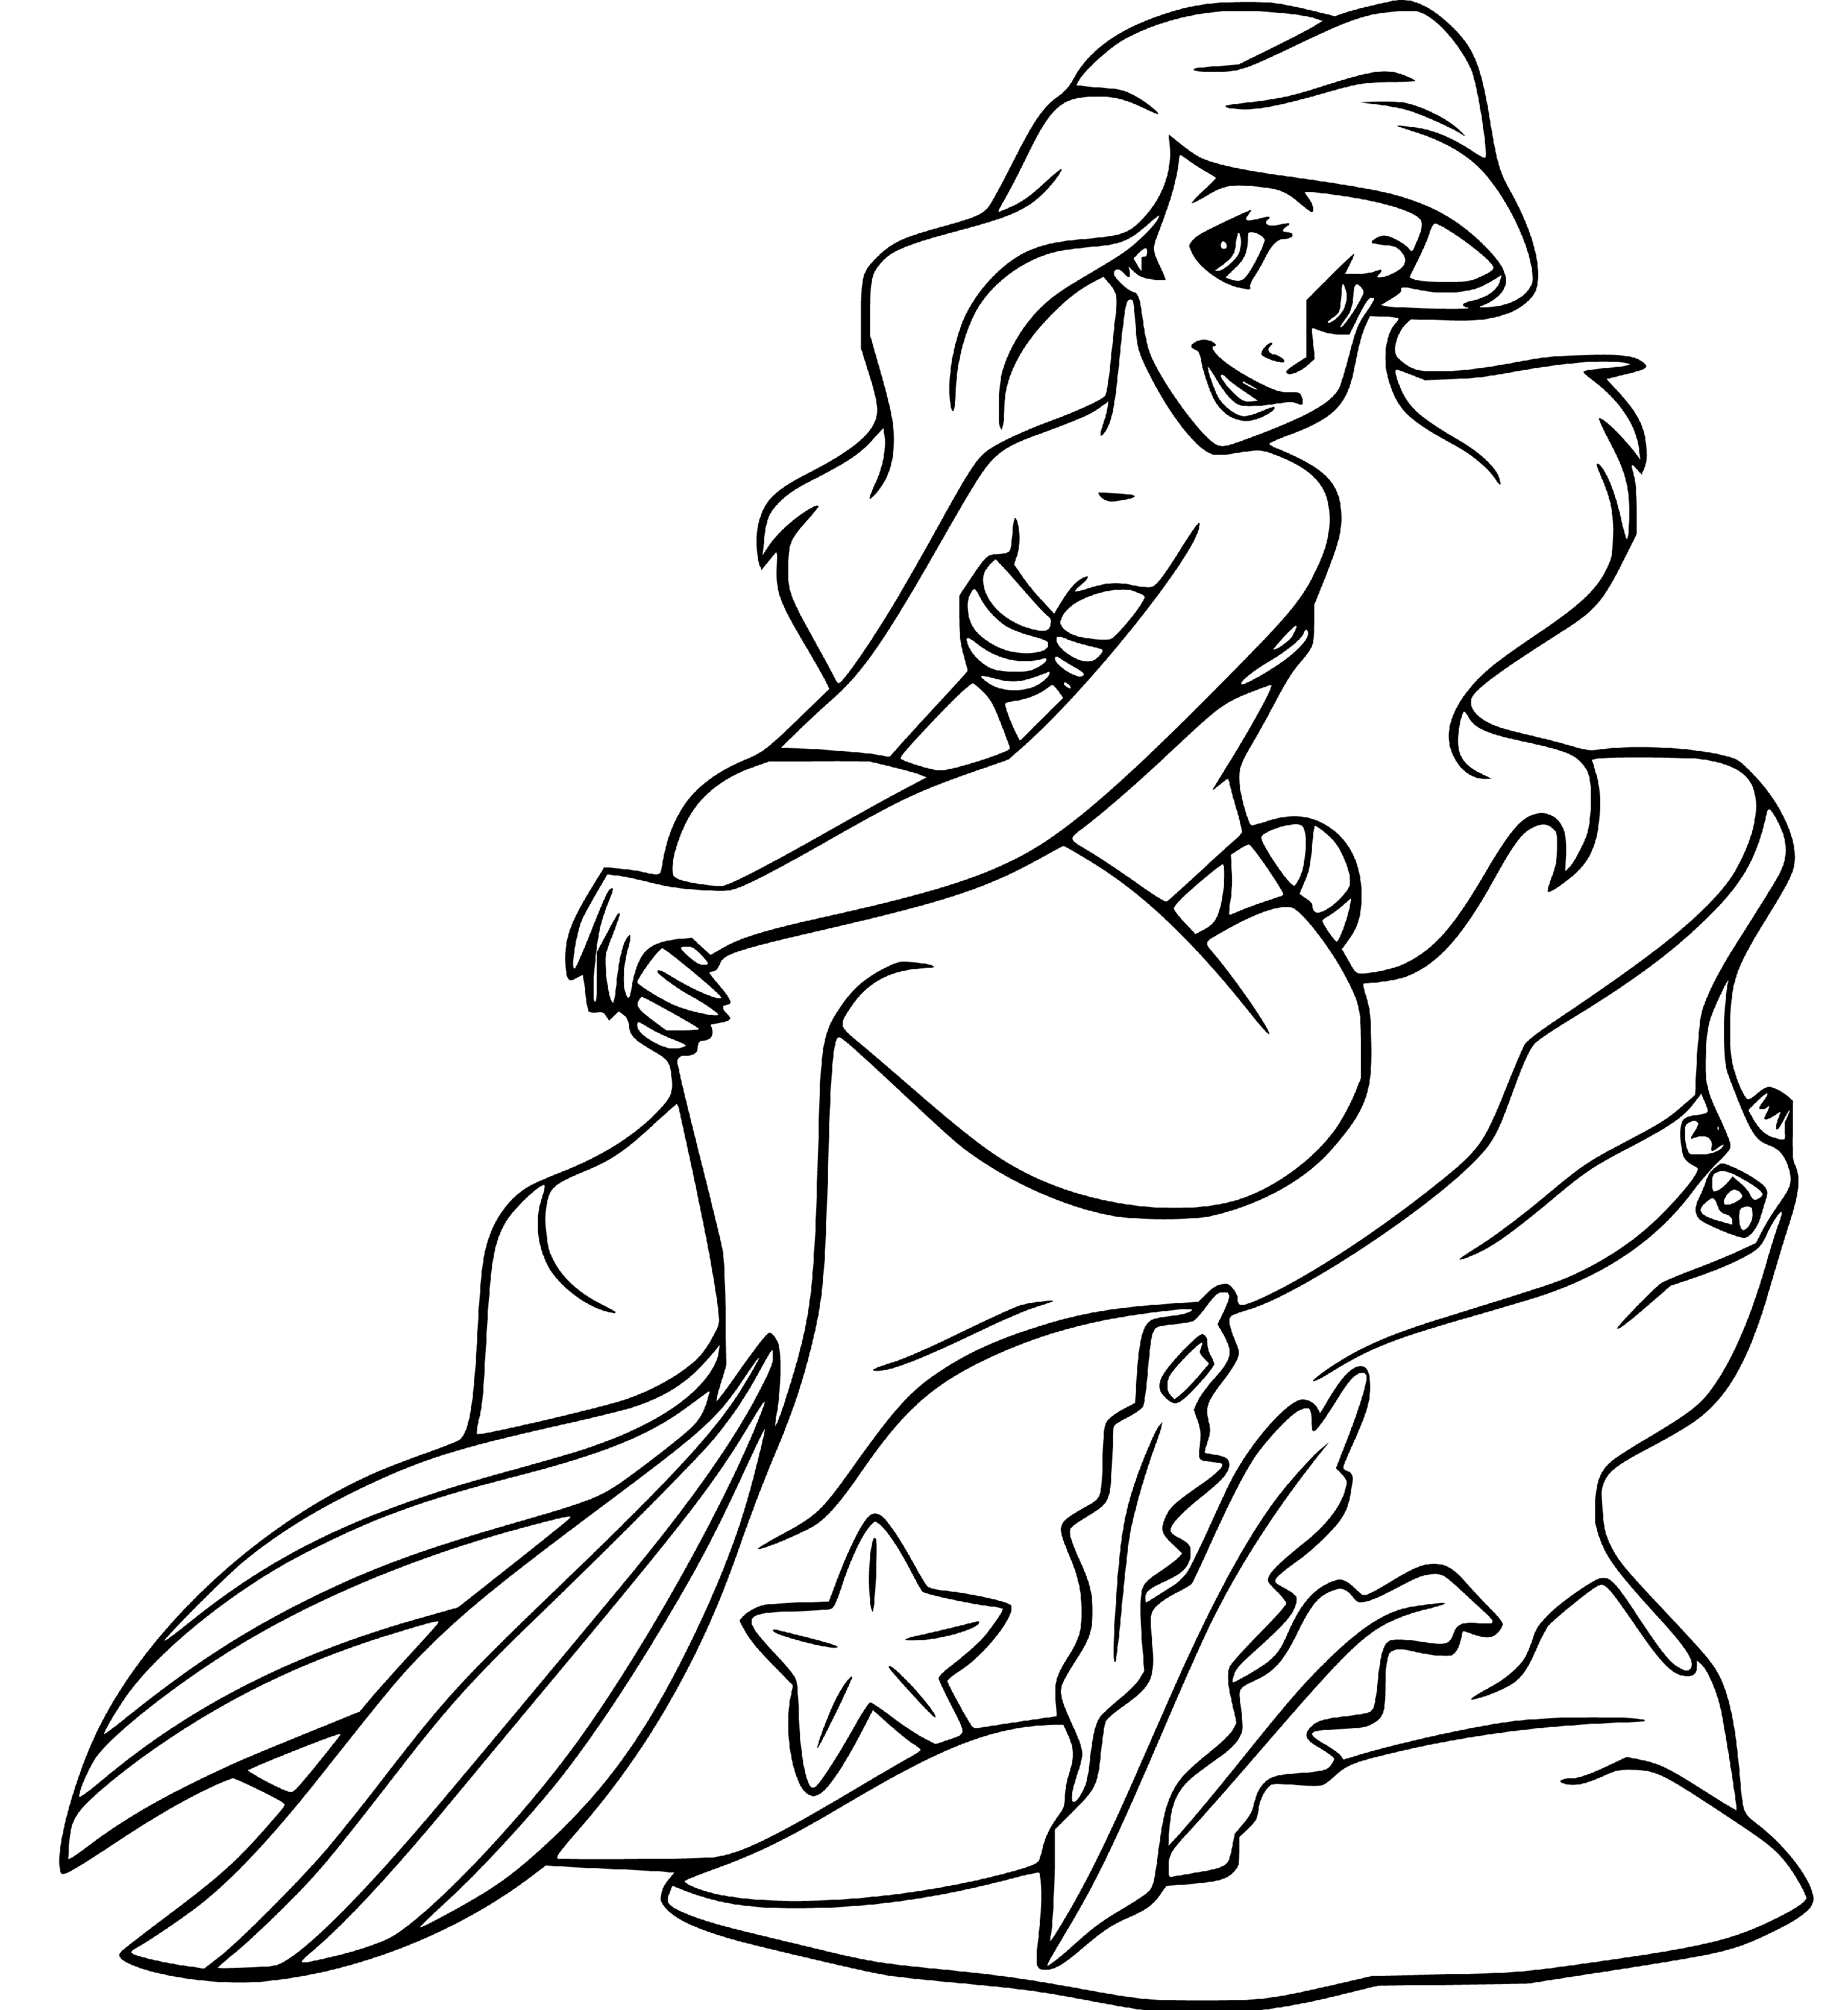 Princess Ariel with Seastars The Little Mermaid Coloring Page - SheetalColor.com